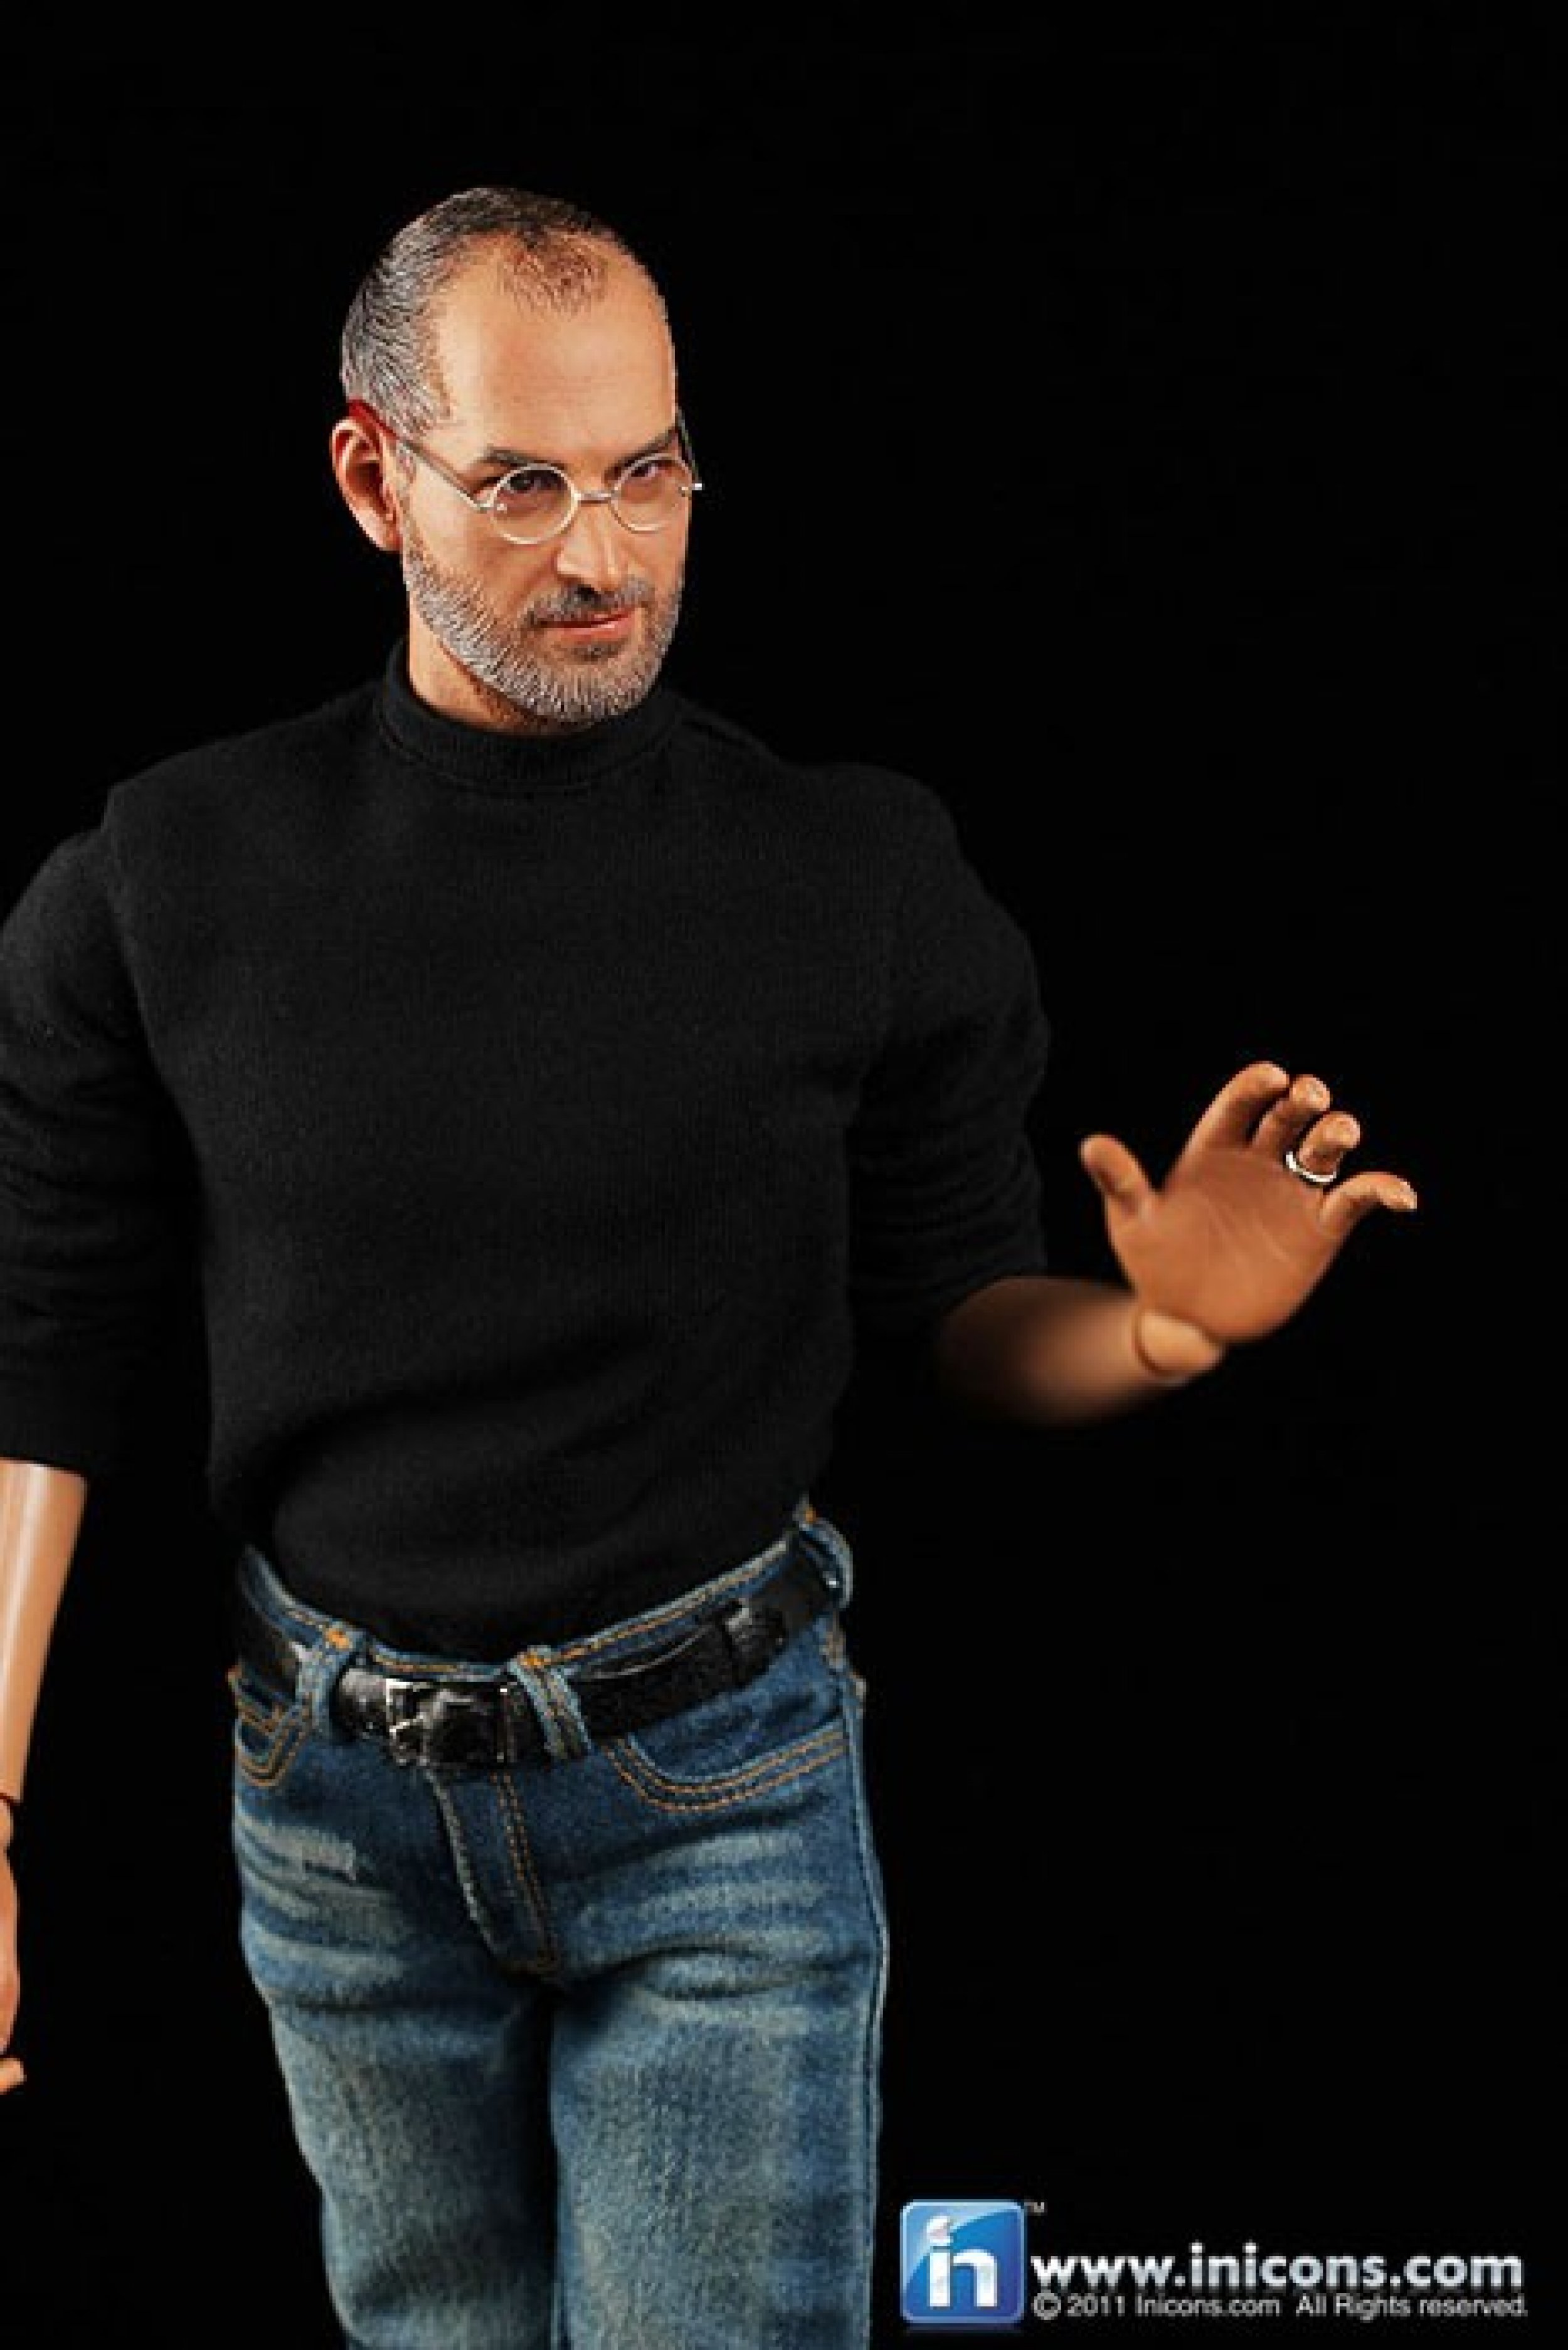 Steve Jobs Doll